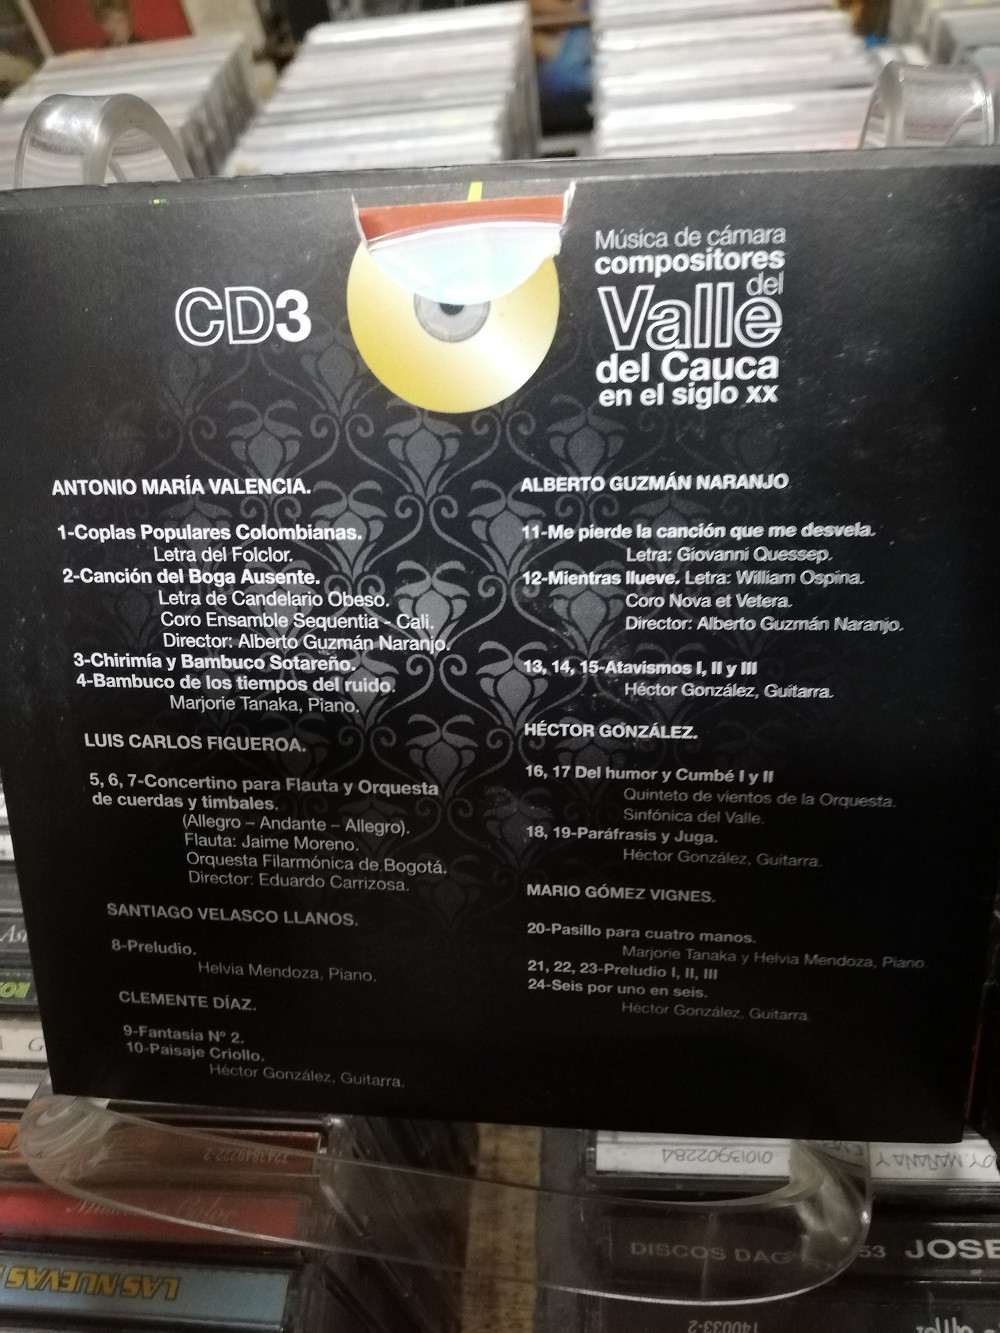 Imagen CD PAISAJE MUSICAL COLOMBIANO VOL. 1 - VALLE DEL CAUCA - CD X 3 6